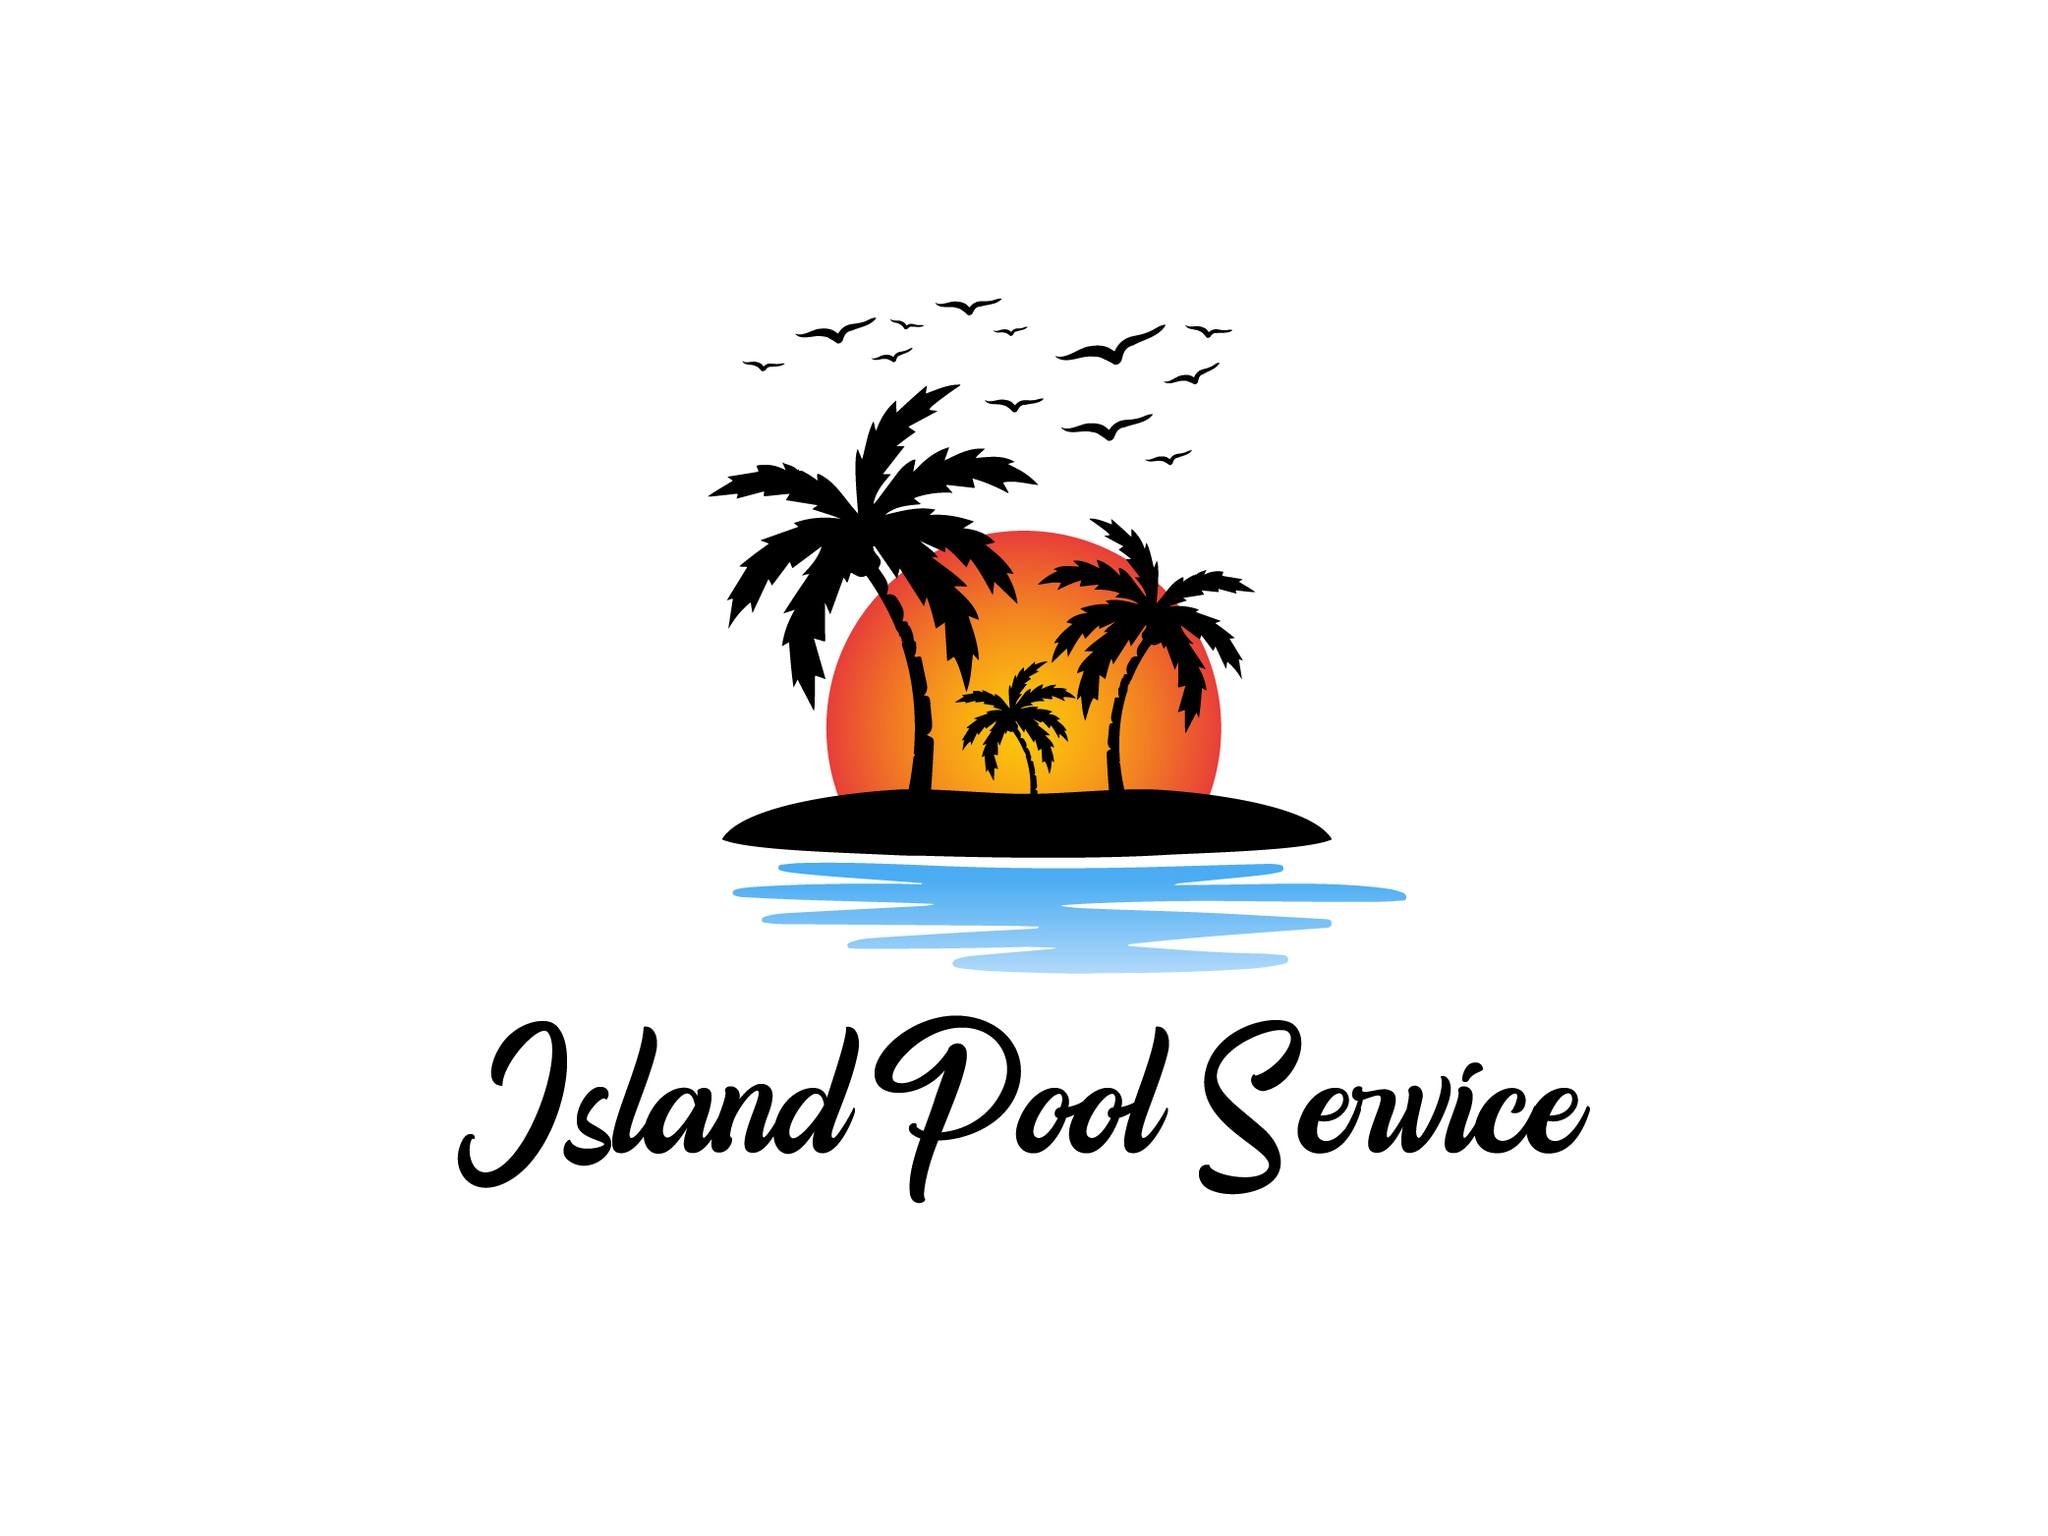 Business logo of Island Pool Service